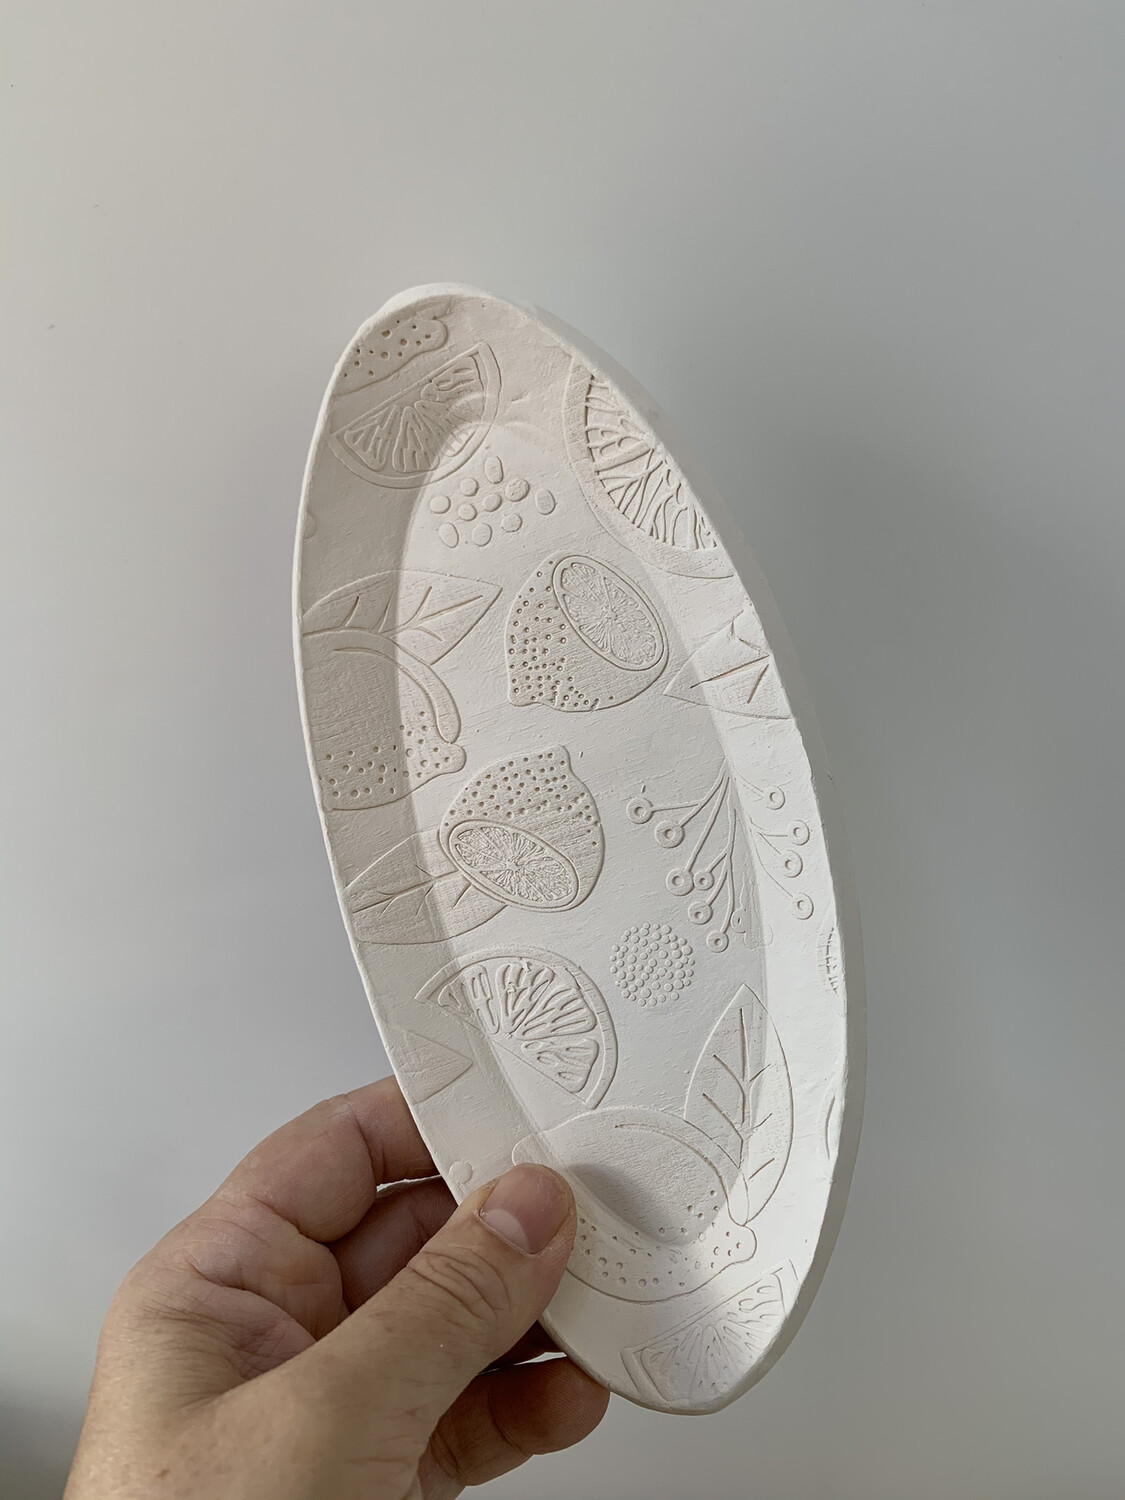 Paint Your Own Pottery - Ceramic
7.75x3.75 Inch Oval Lemon Lime Orange Citrus Plate Painting Kit